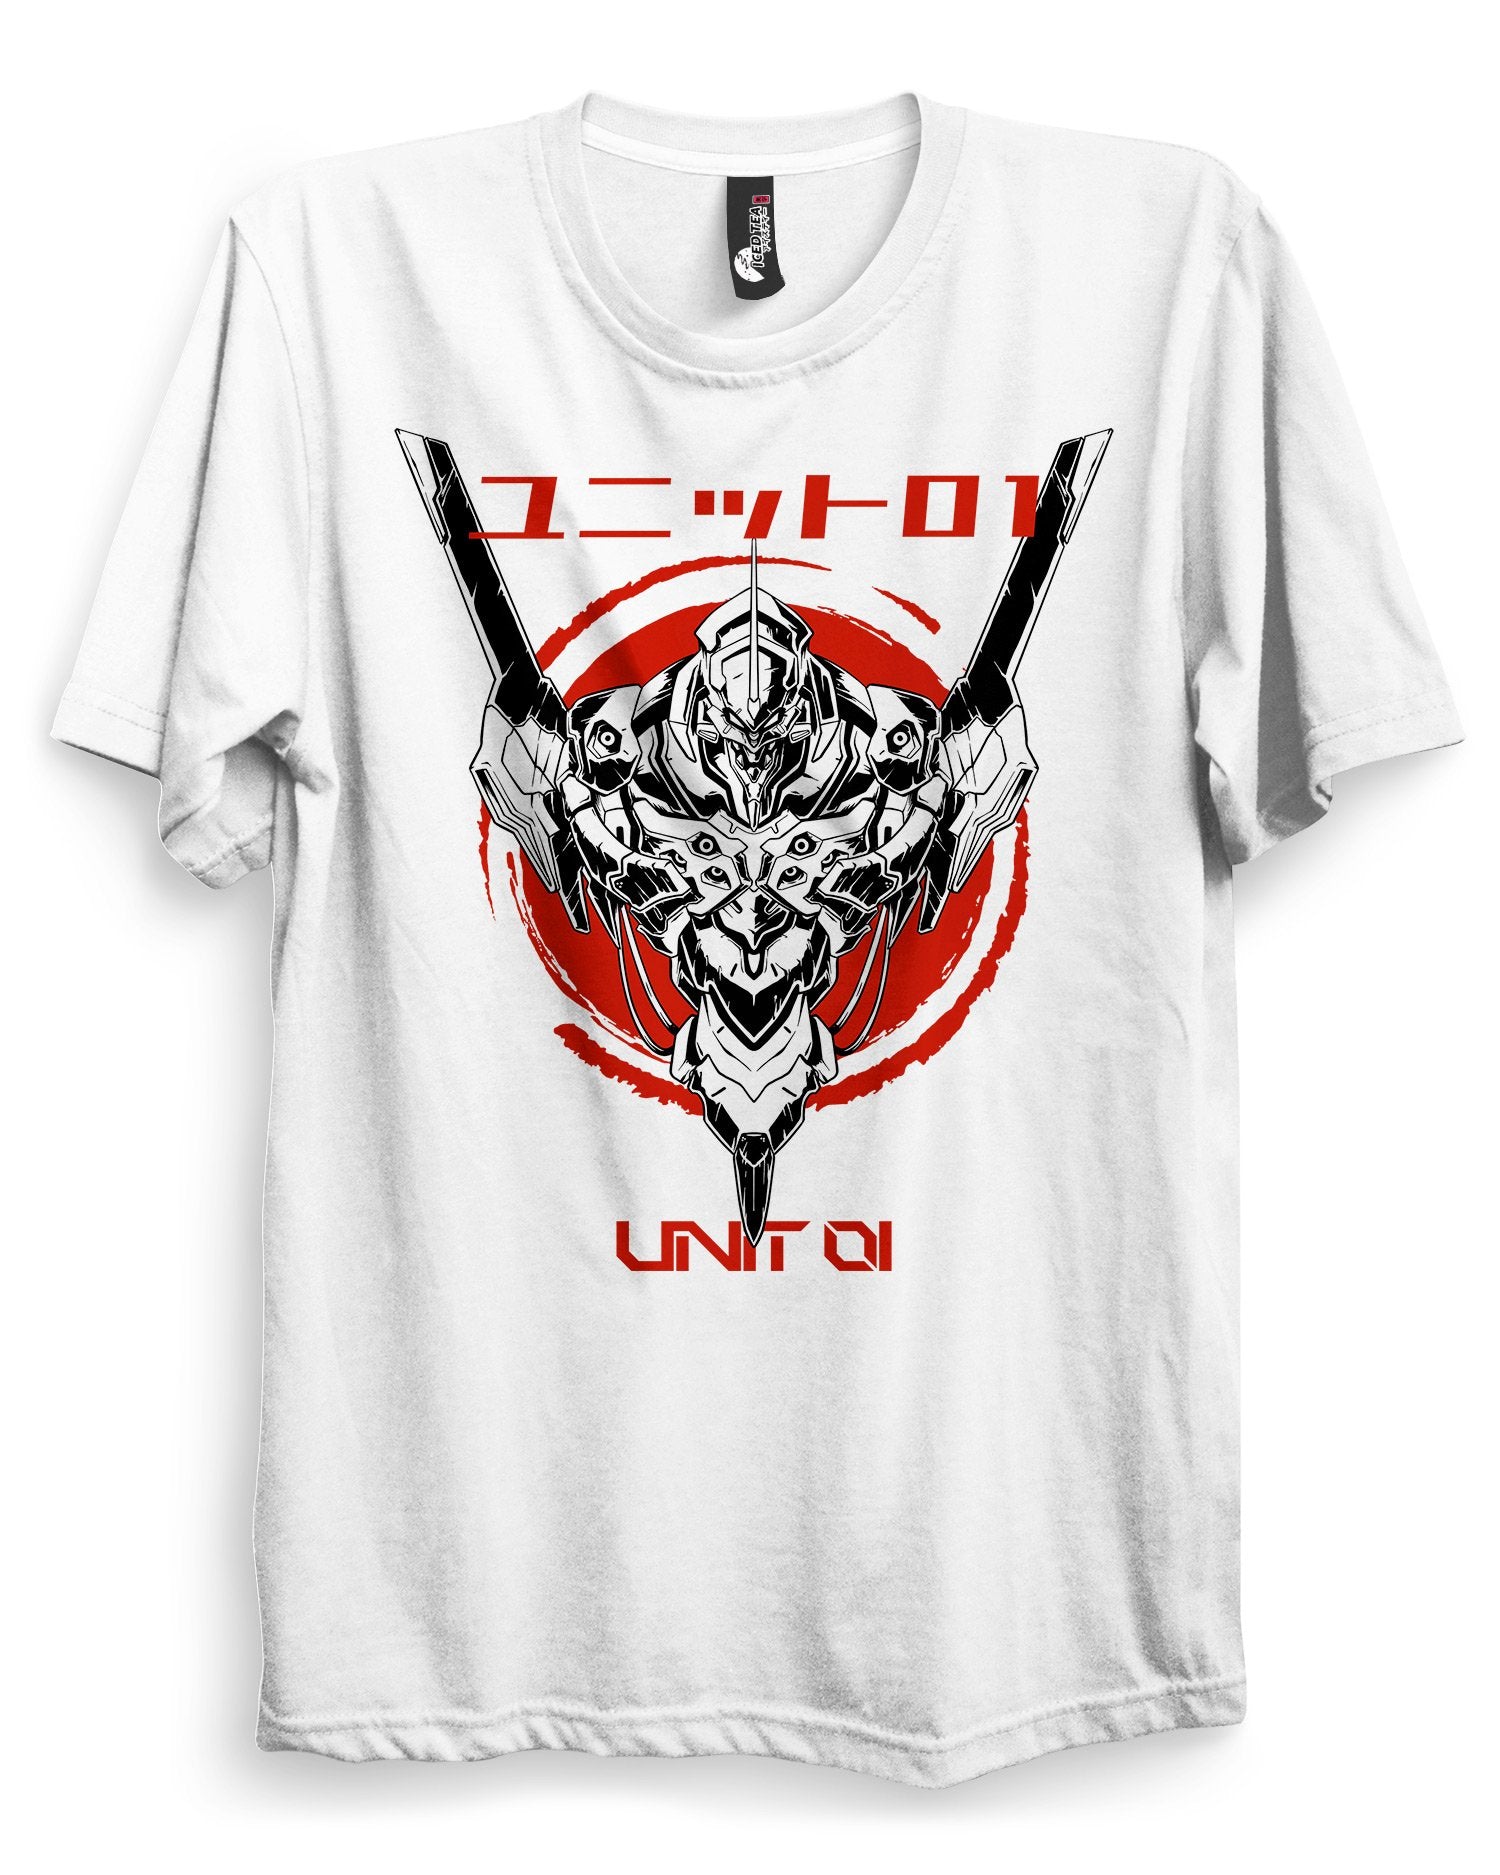 EVA UNIT 01 - Anime T-Shirt - Dark Aesthetics and Anime Clothing Streetwear